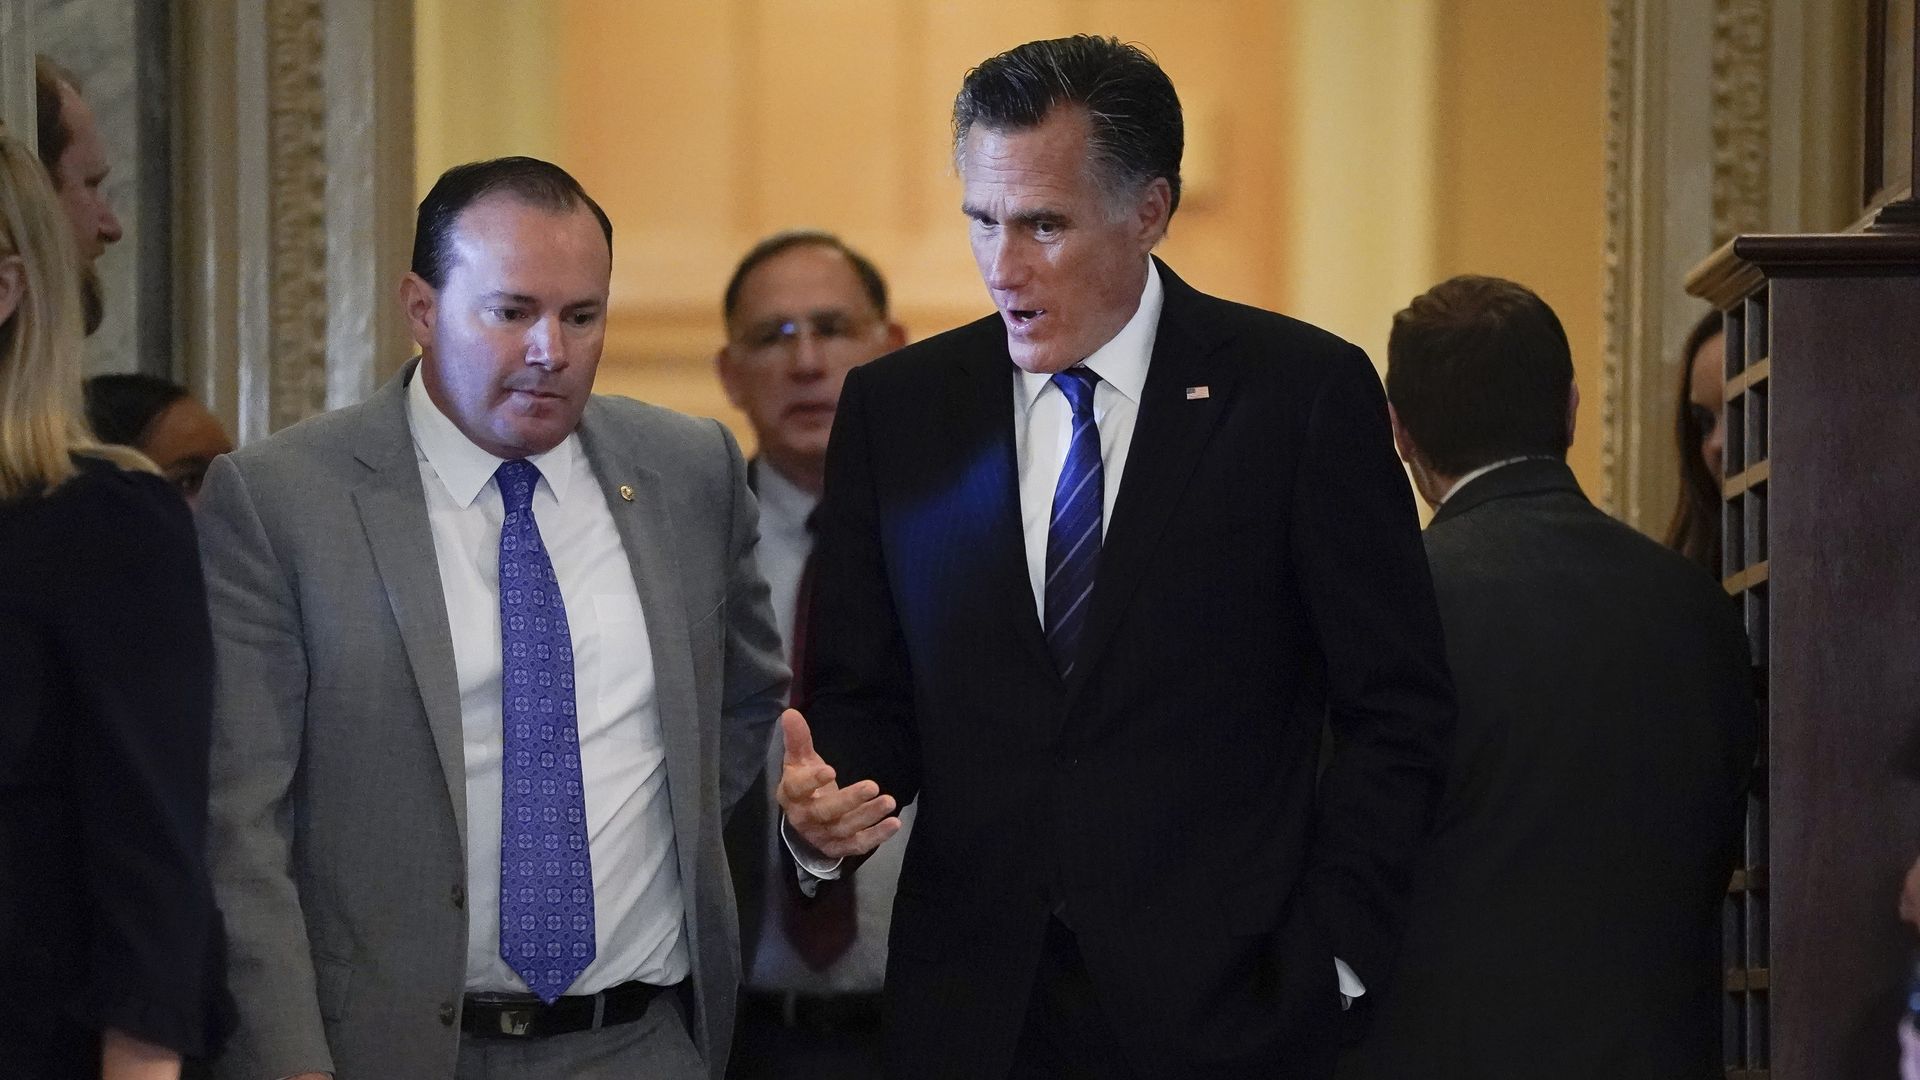 Utah Sens. Mike Lee and Mitt Romney walk down a hallway while talking.